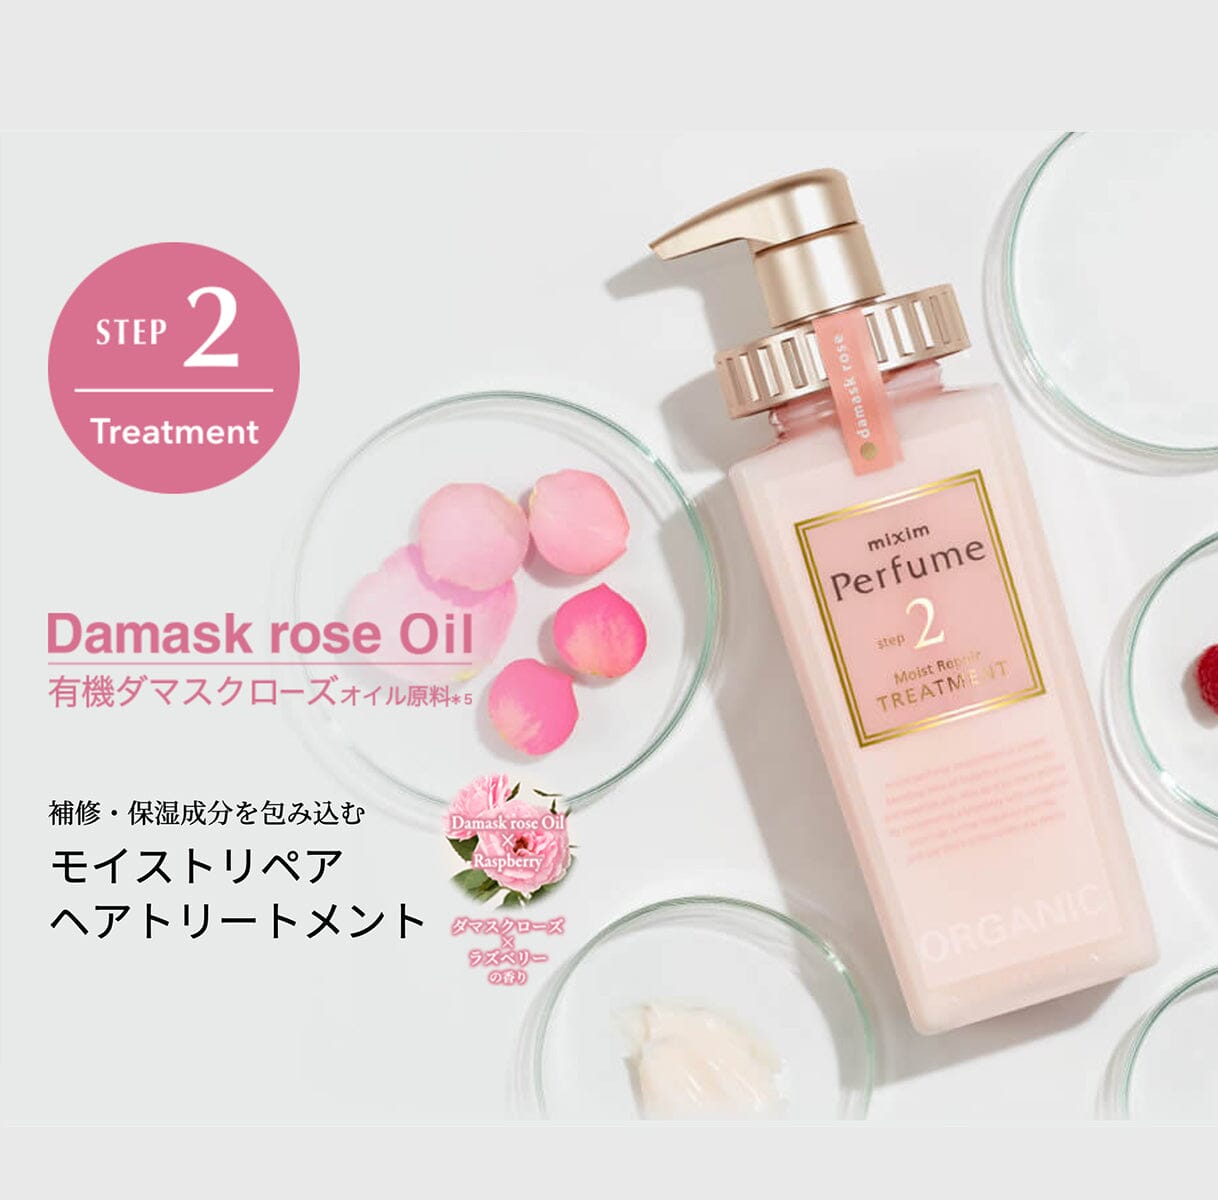 ViCREA Mixim Perfume Damask Rose Moist Repair Treatment 440ml